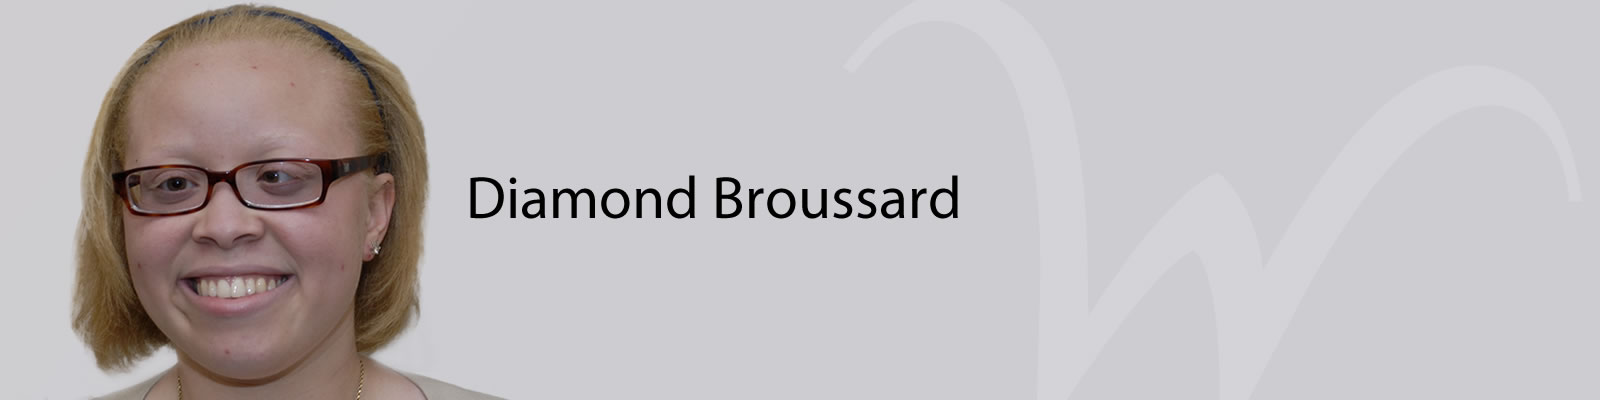 Image of Diamond Broussard